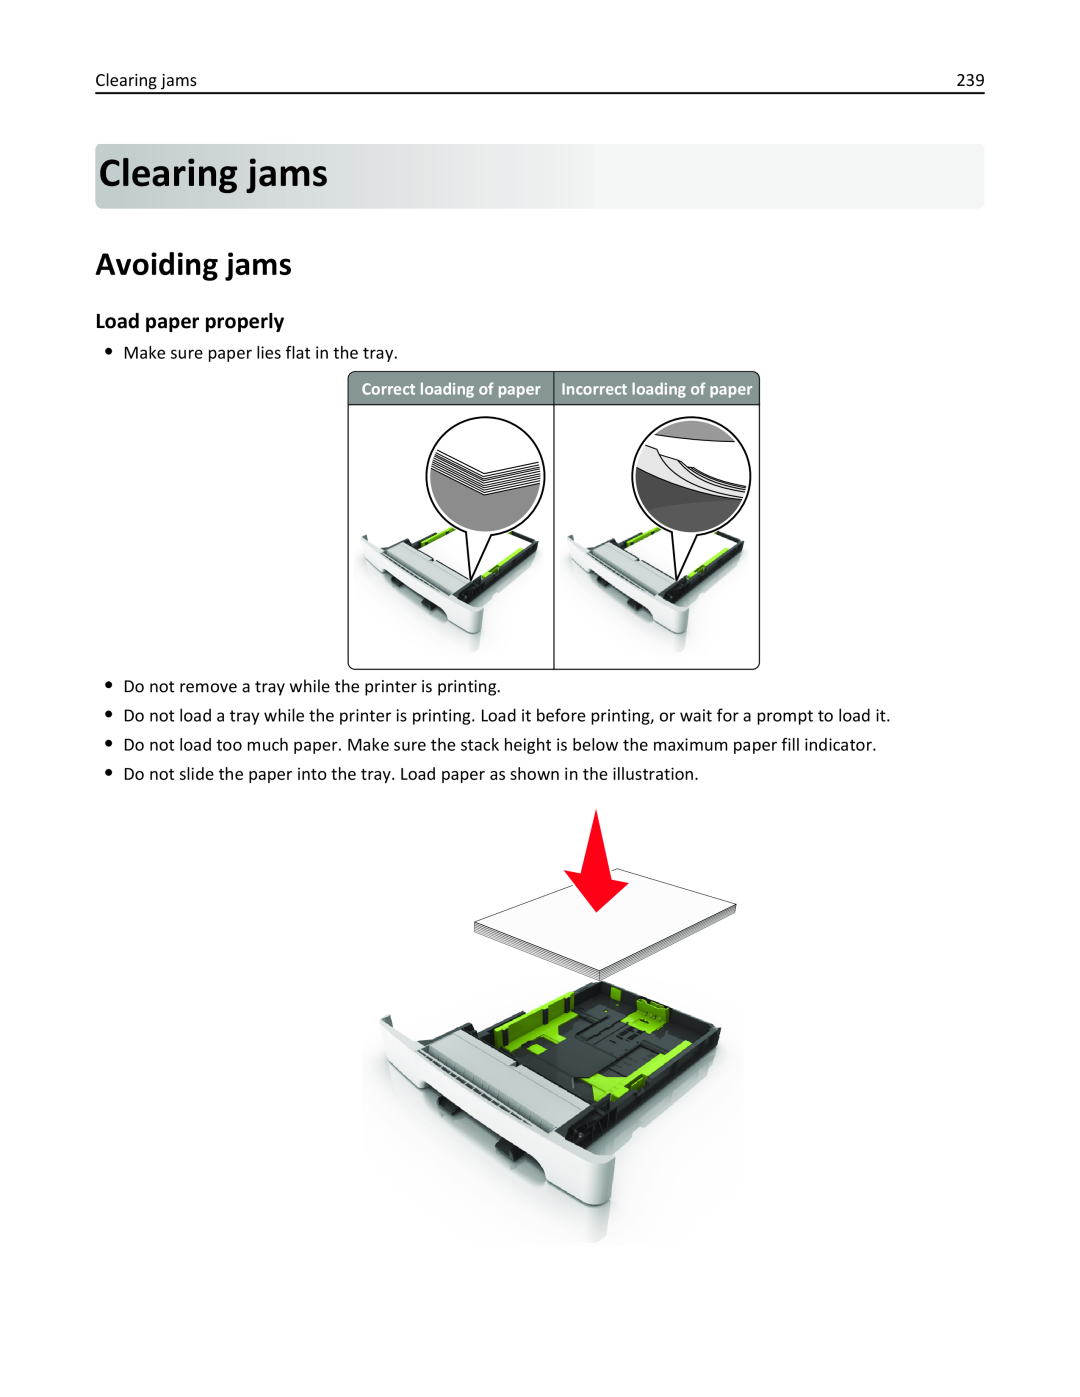 Lexmark 436 manual Clearing jams, Avoiding jams, Load paper properly 